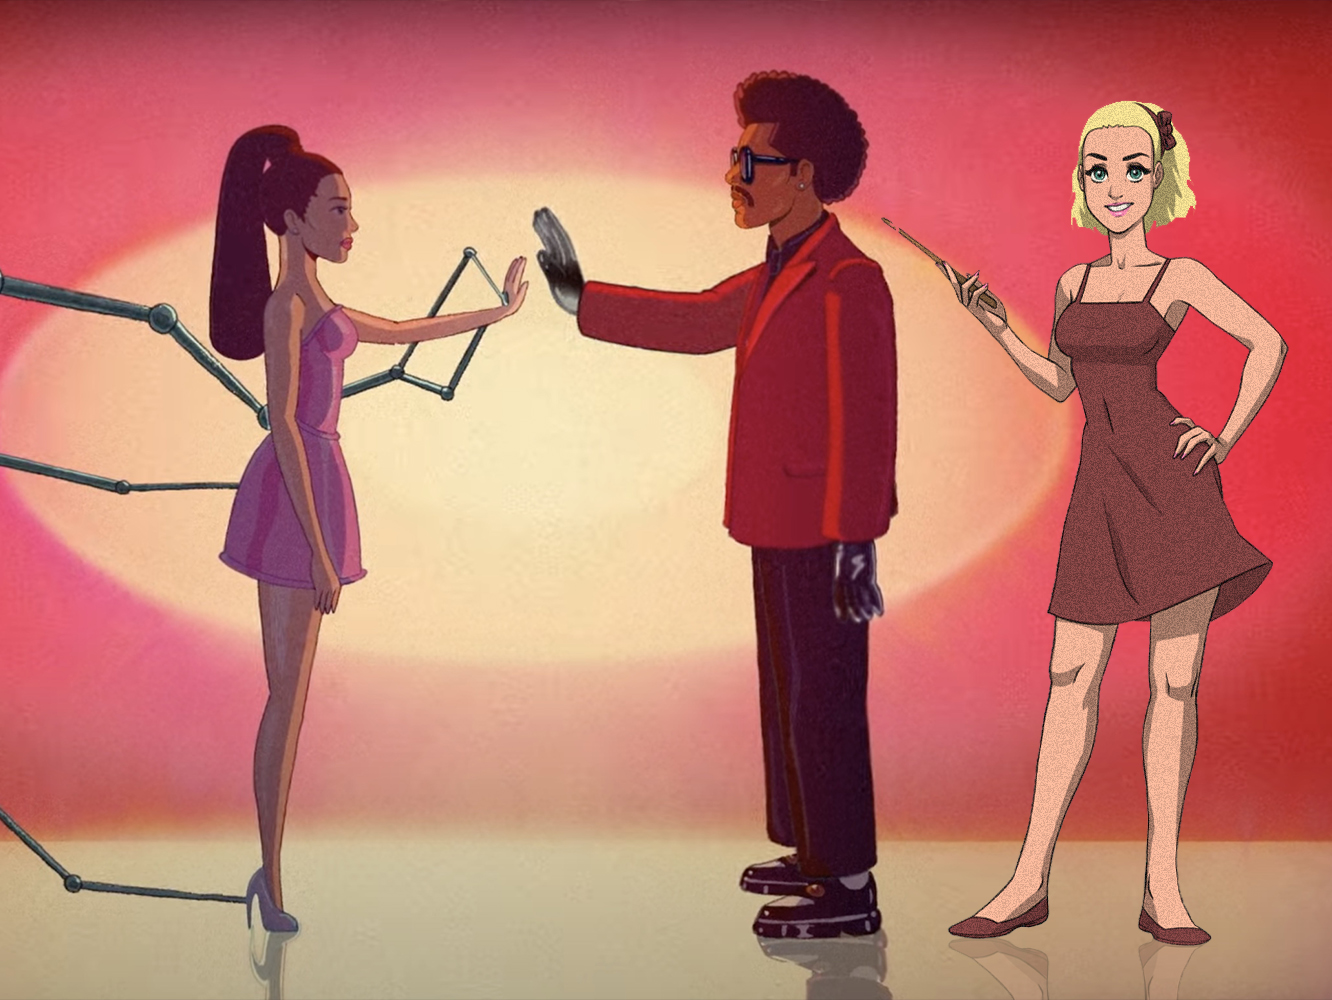  The Weeknd y Katy Perry invitan a amigos a los remixes de ‘Save Your Tears’ y ‘Cry About It Later’